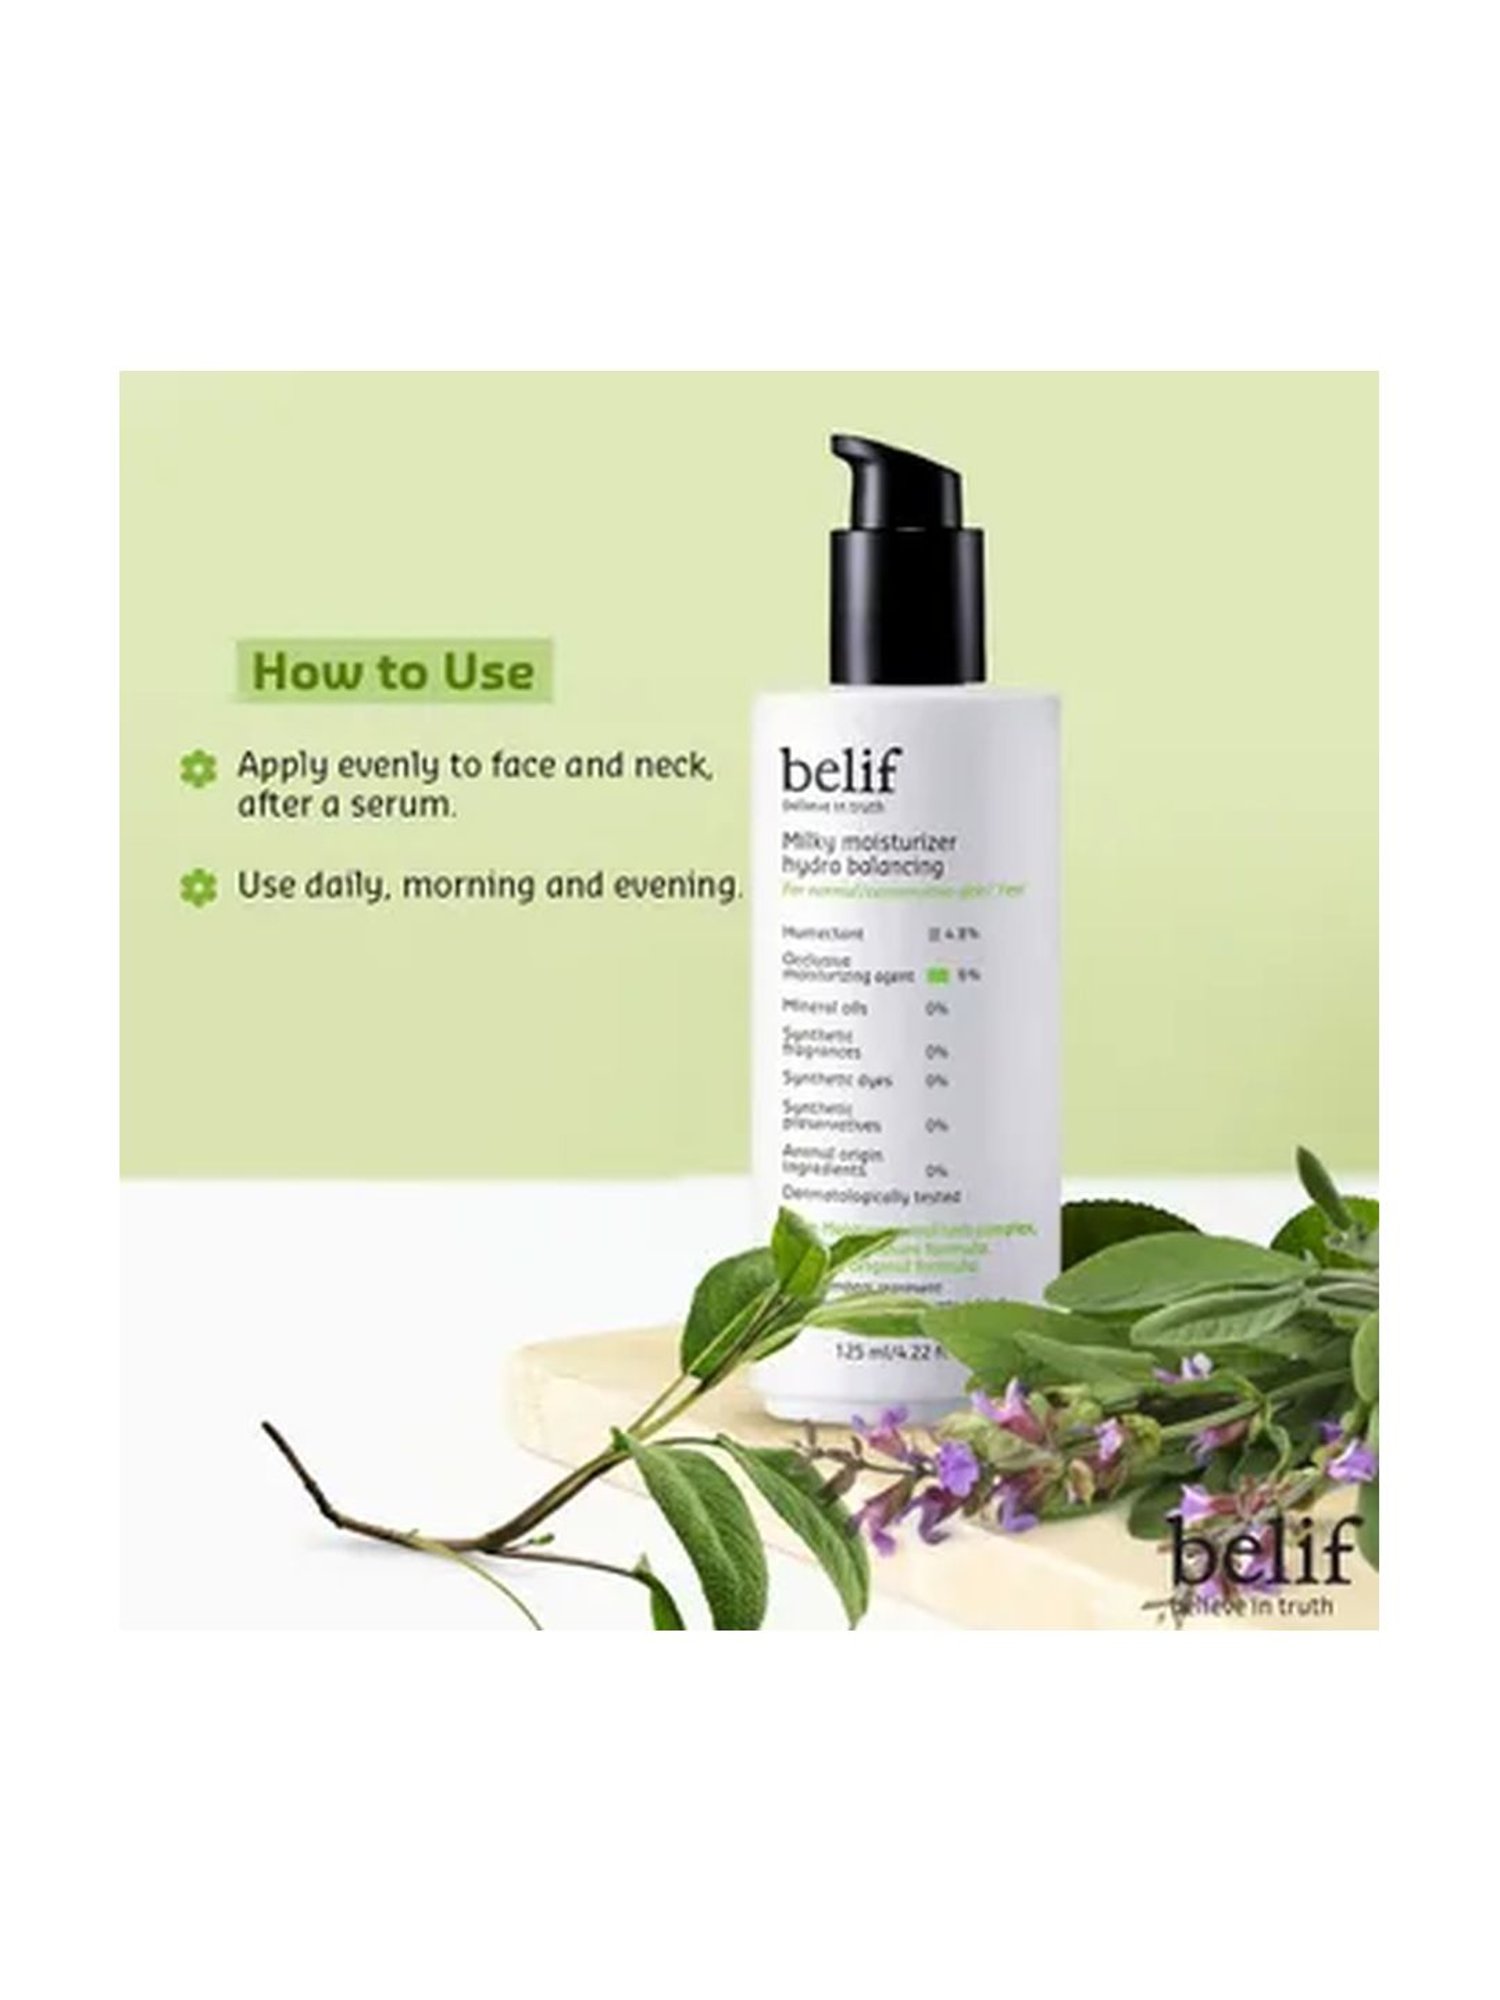 Belif Milky Moisturizer Hydra Balancing Korean Cosmetics Beauty Skin